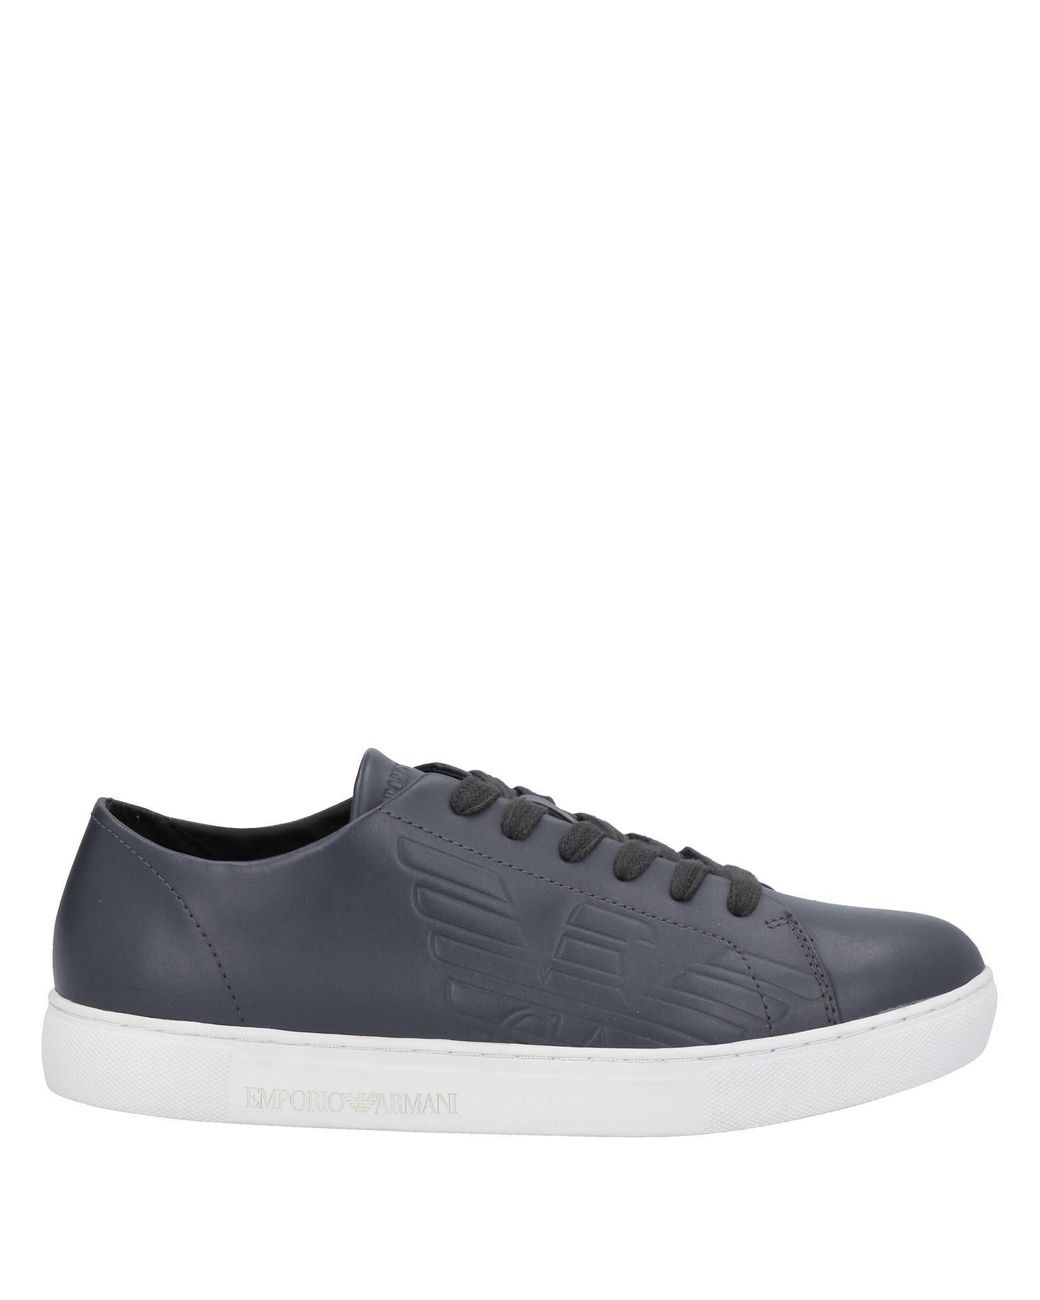 Emporio Armani Low-tops & Sneakers in Grey (Gray) for Men - Lyst